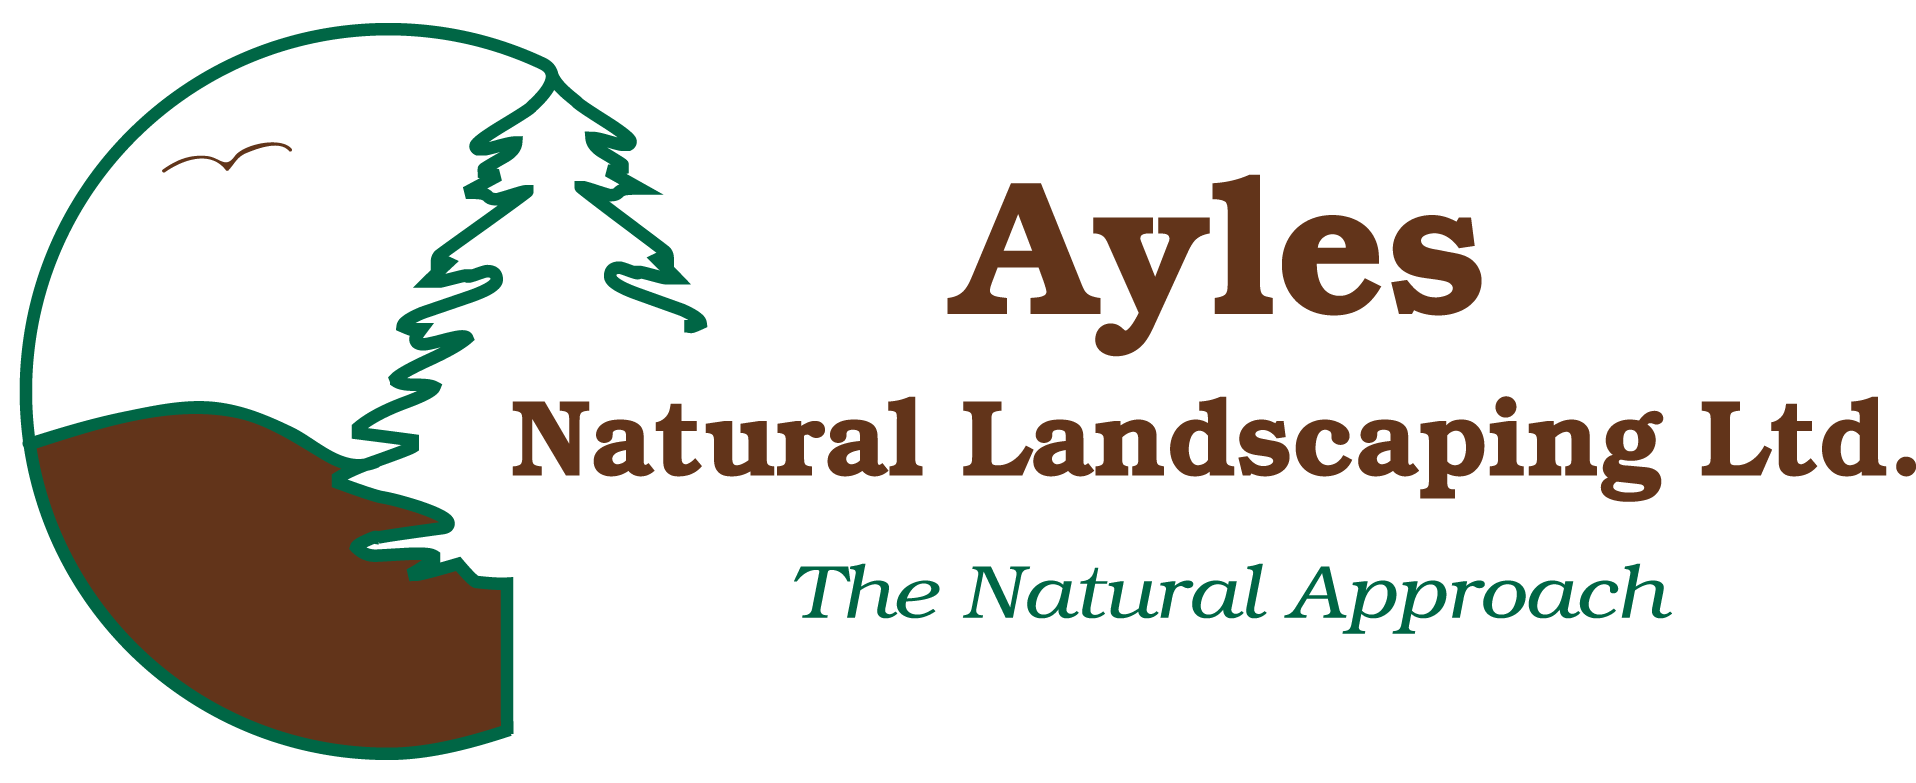 Ayles Natural Landscaping Ltd